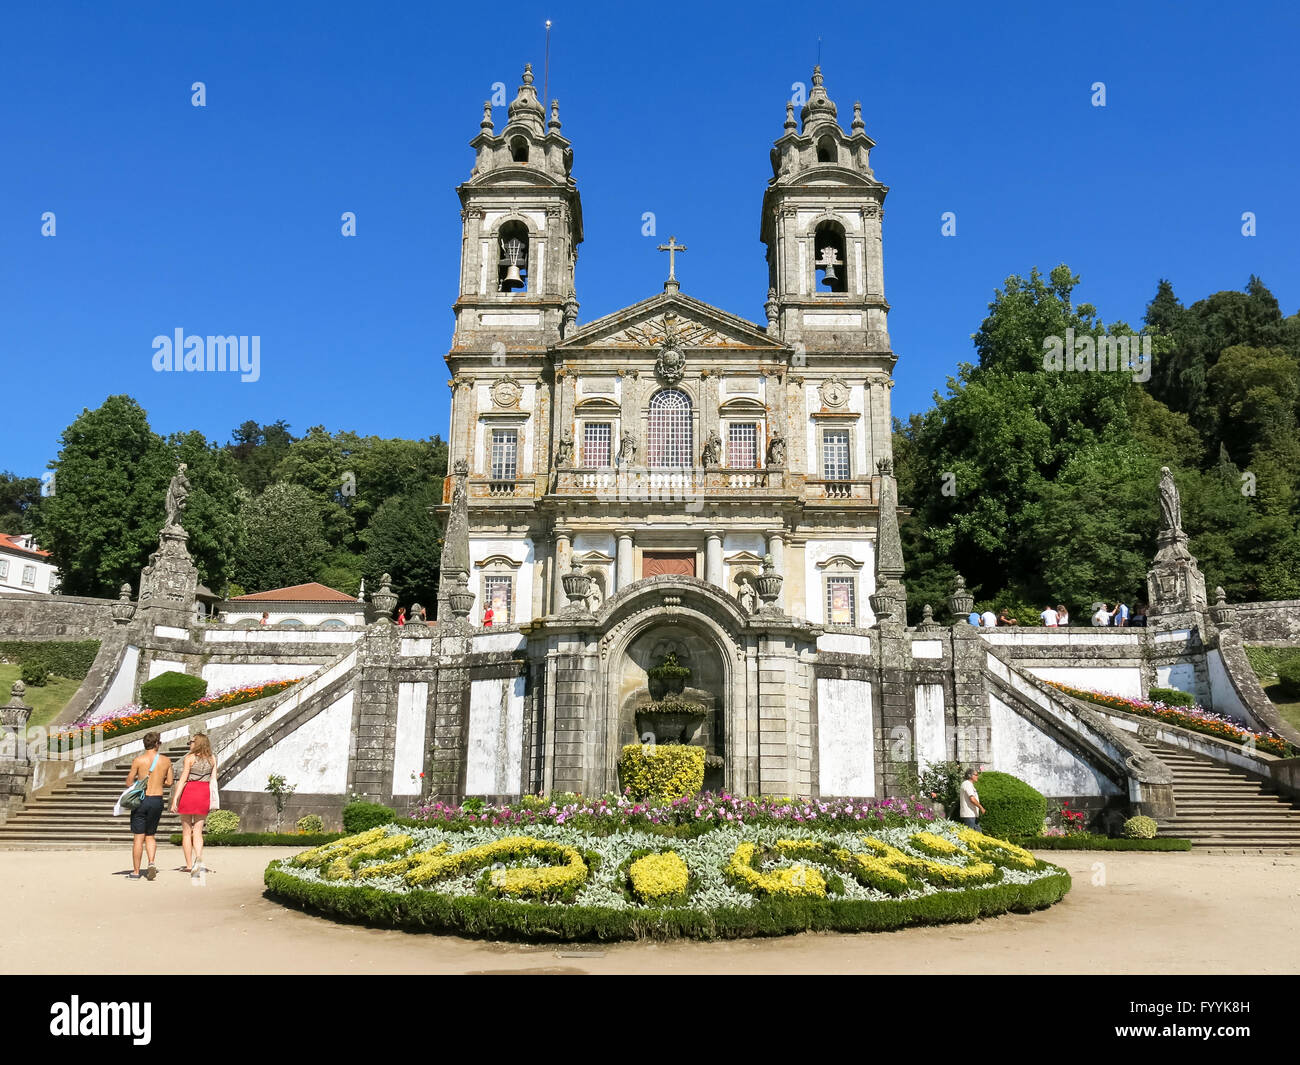 Facade of Bom Jesus do Monte, Portuguese sanctuary in Tenoes near the city of Braga in Portugal Stock Photo